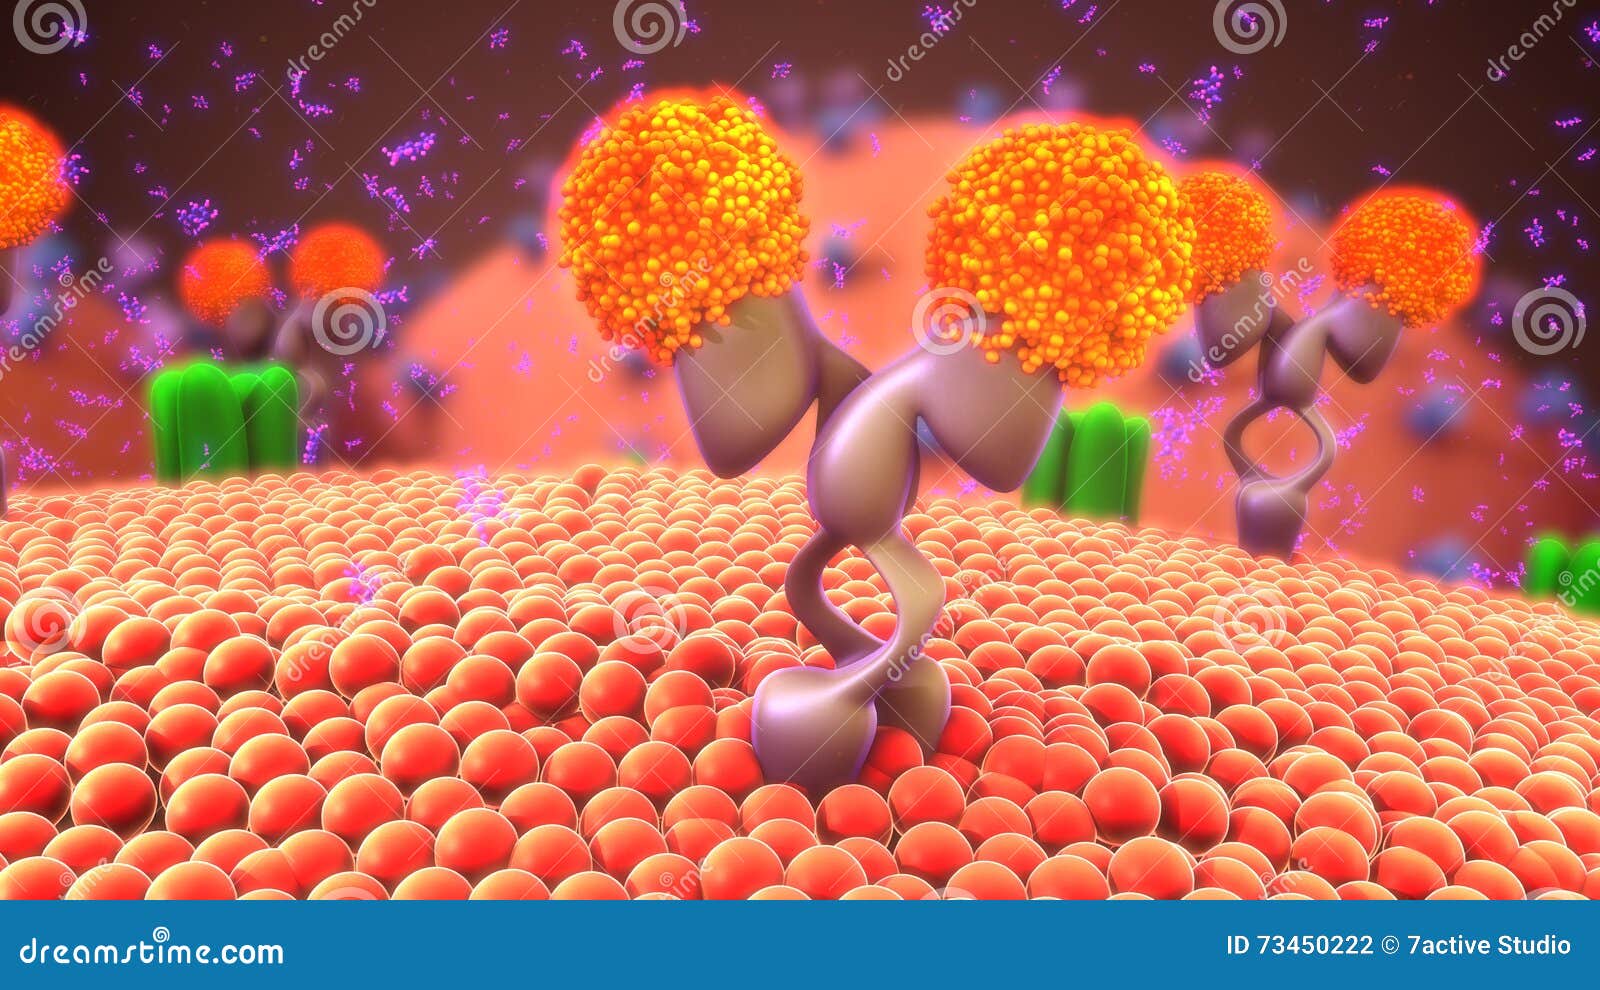 cell membrane receptors